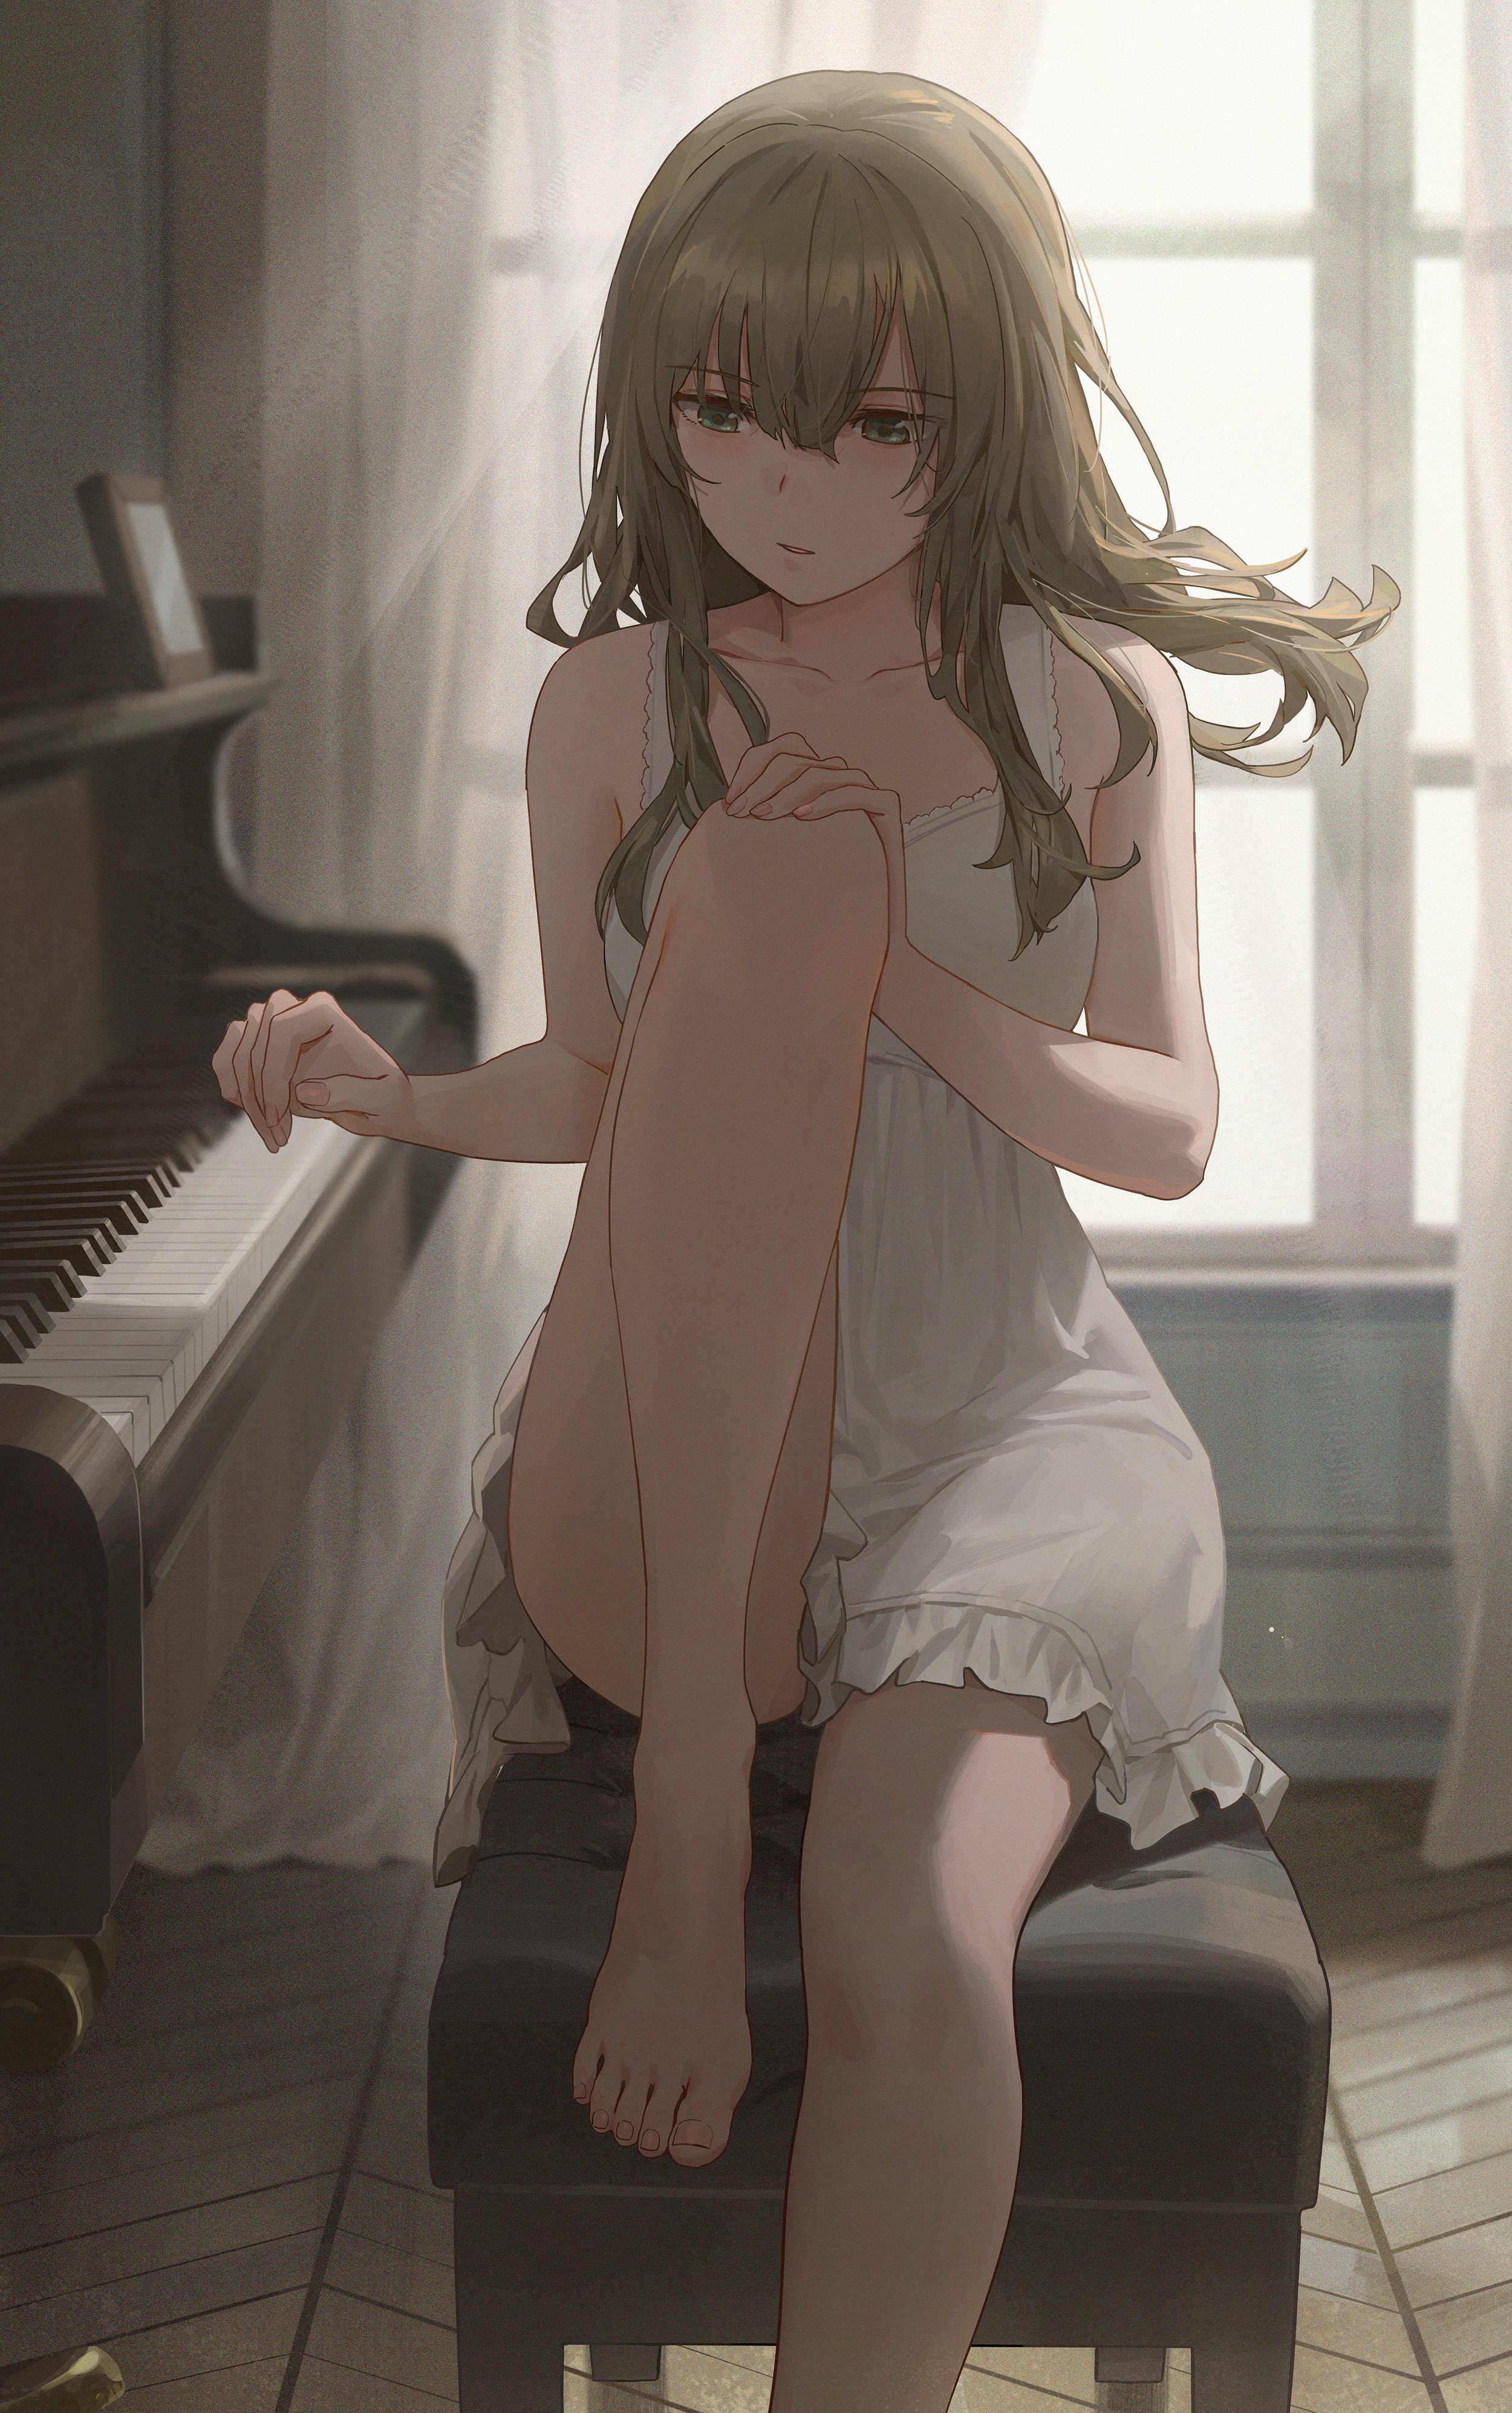 Anime 2500x3989 anime anime girls piano musical instrument dress barefoot artwork Yohan1754